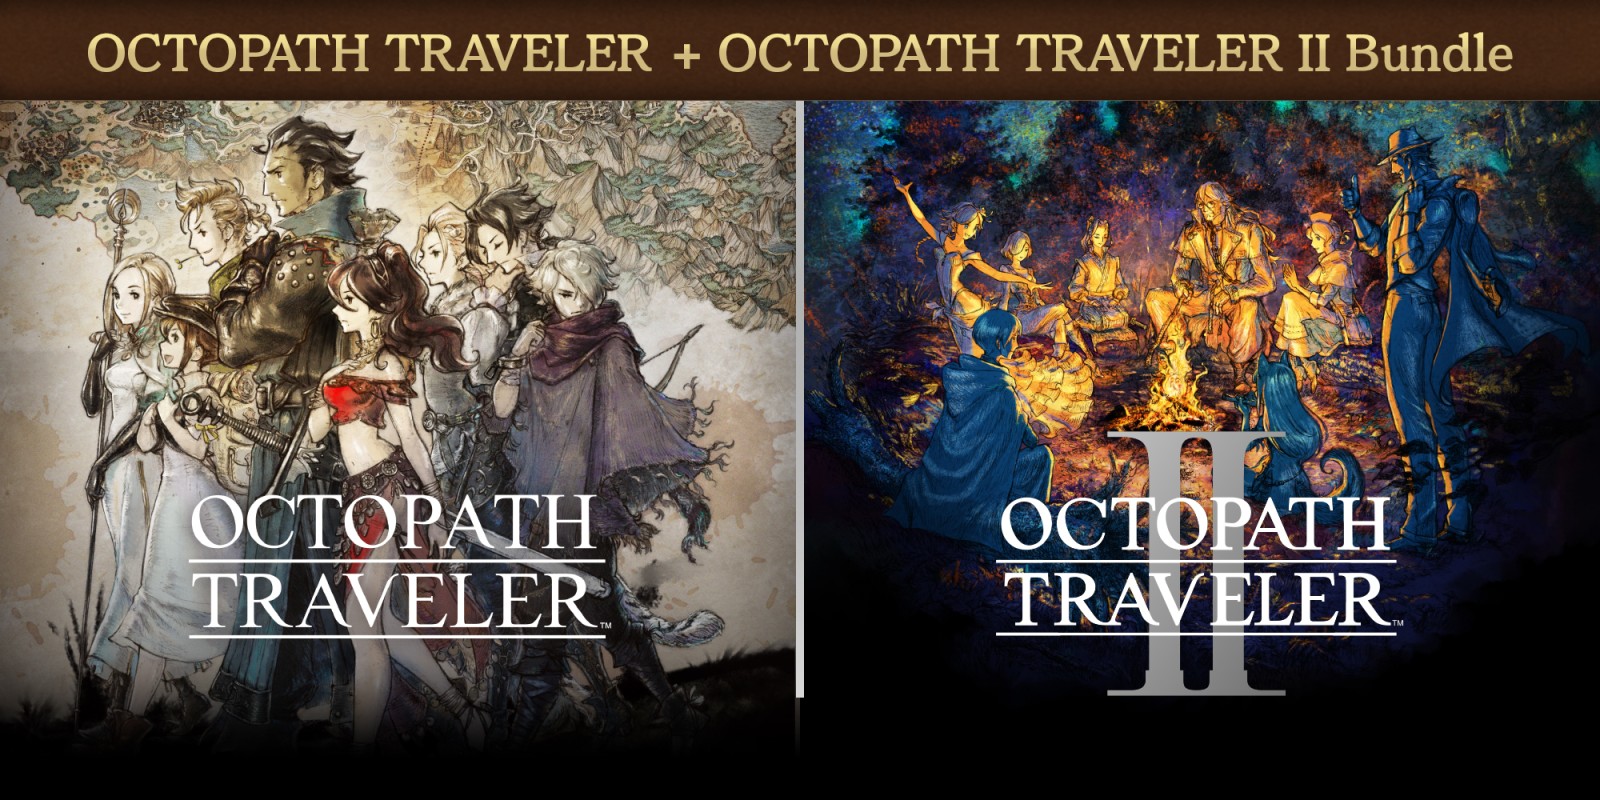 OCTOPATH TRAVELER + OCTOPATH TRAVELER II Bundle